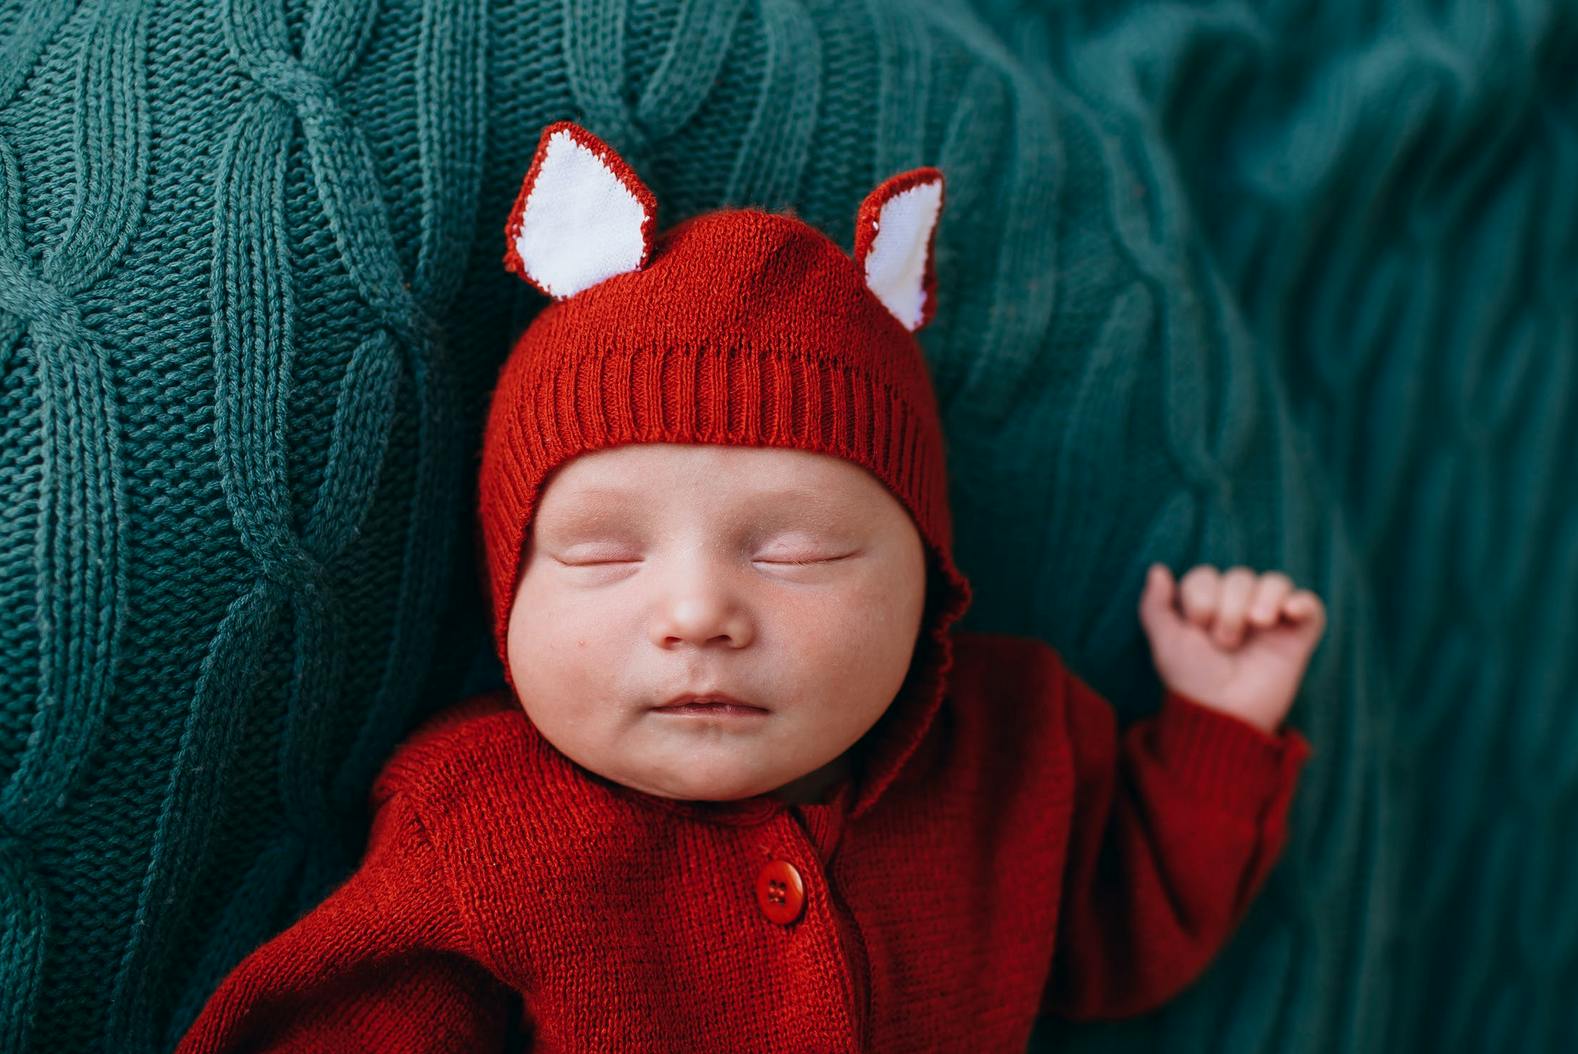 newborn baby in red pajamas sleeping